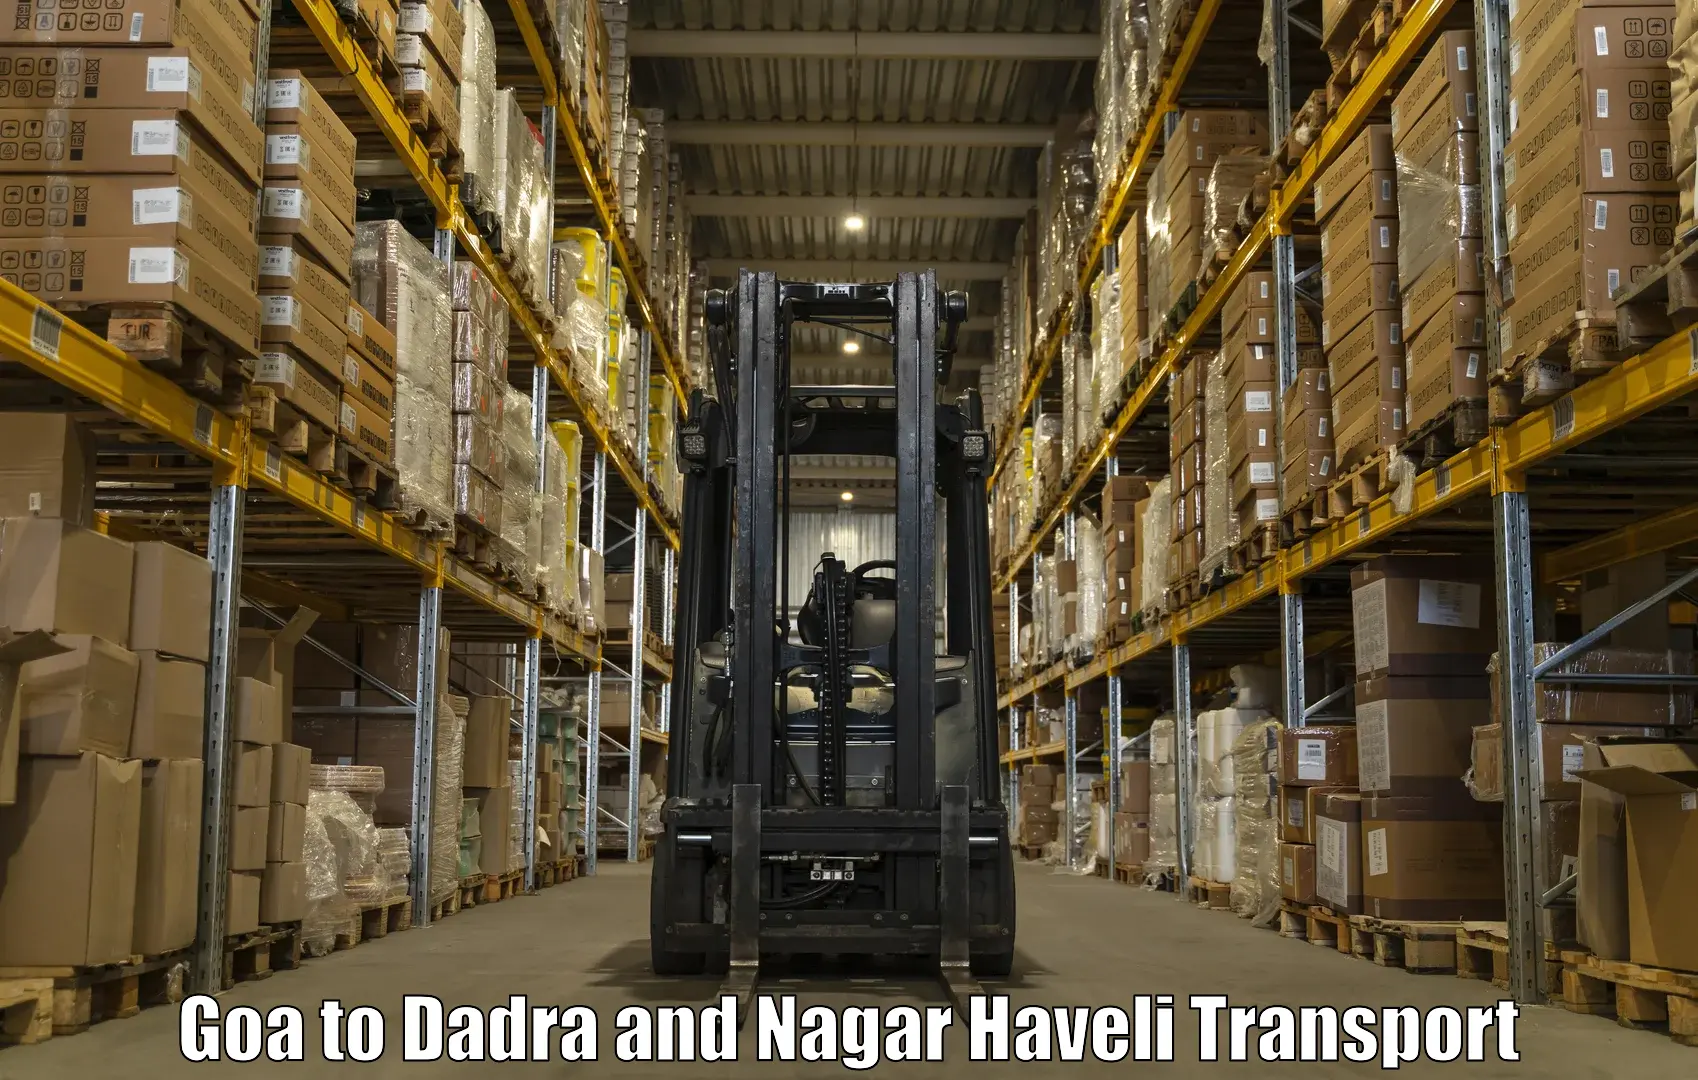 Delivery service Goa to Dadra and Nagar Haveli